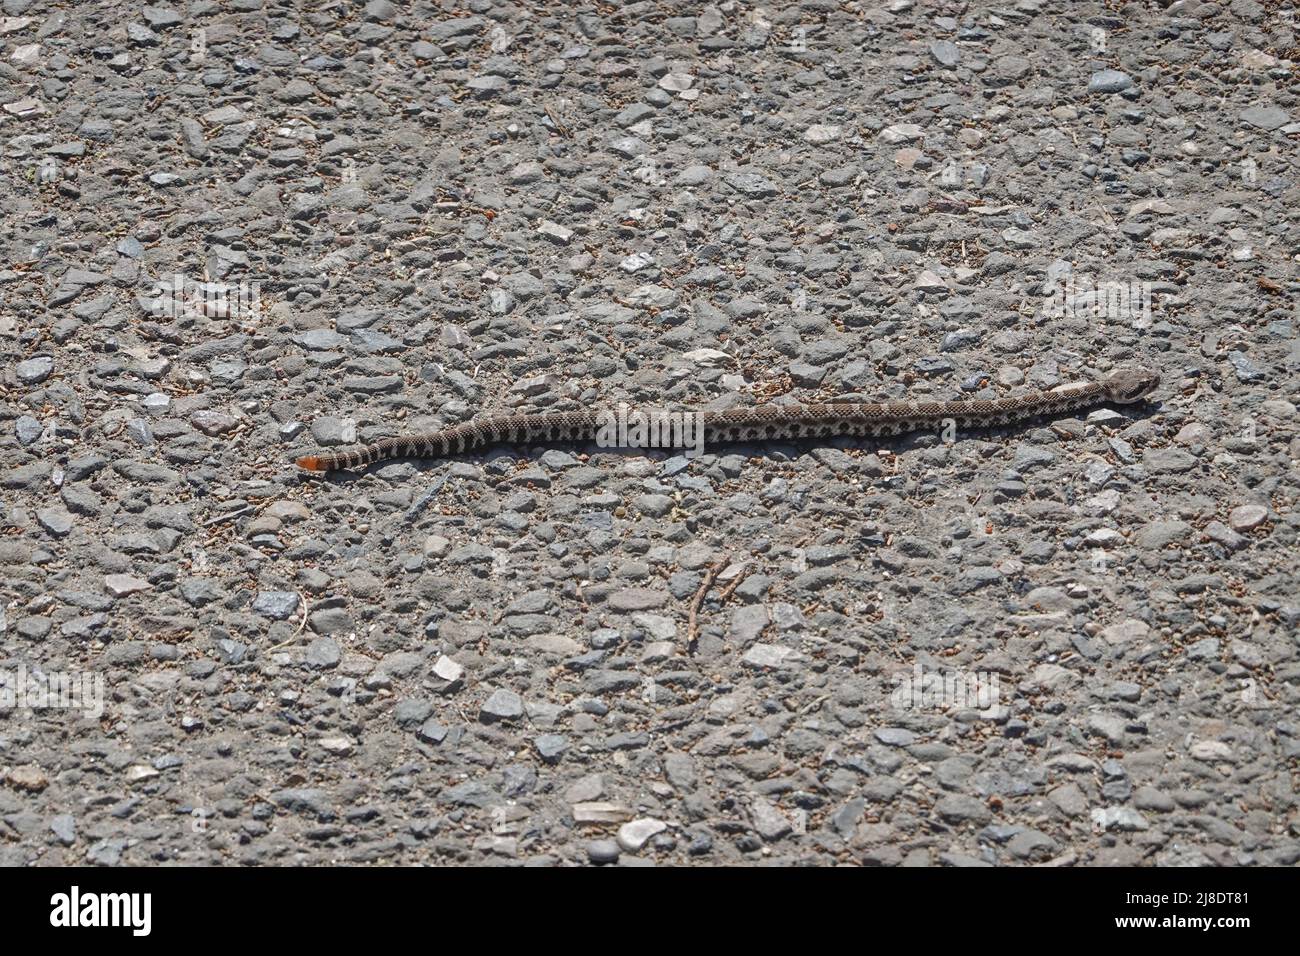 Baby rattlesnake crossing a road in the early morning warmth Montaña de Oro State Park, San Luis Obispo County, California ,USA Stock Photo